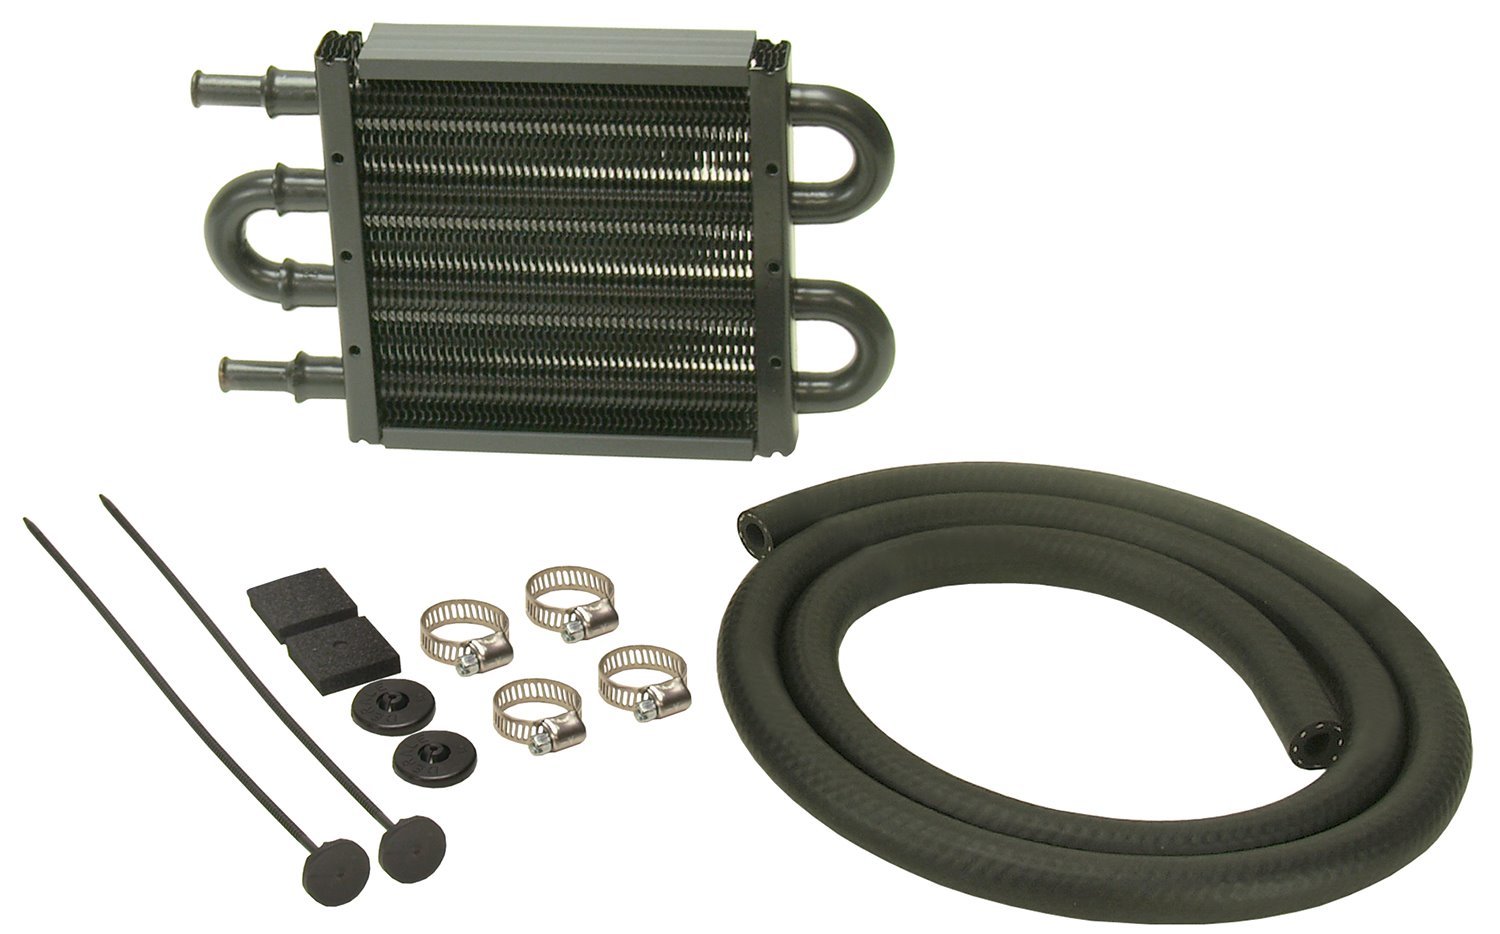 4 Pass Series 7000 Power Steering Cooler Kit 8-1/8" x 5" x 3/4"